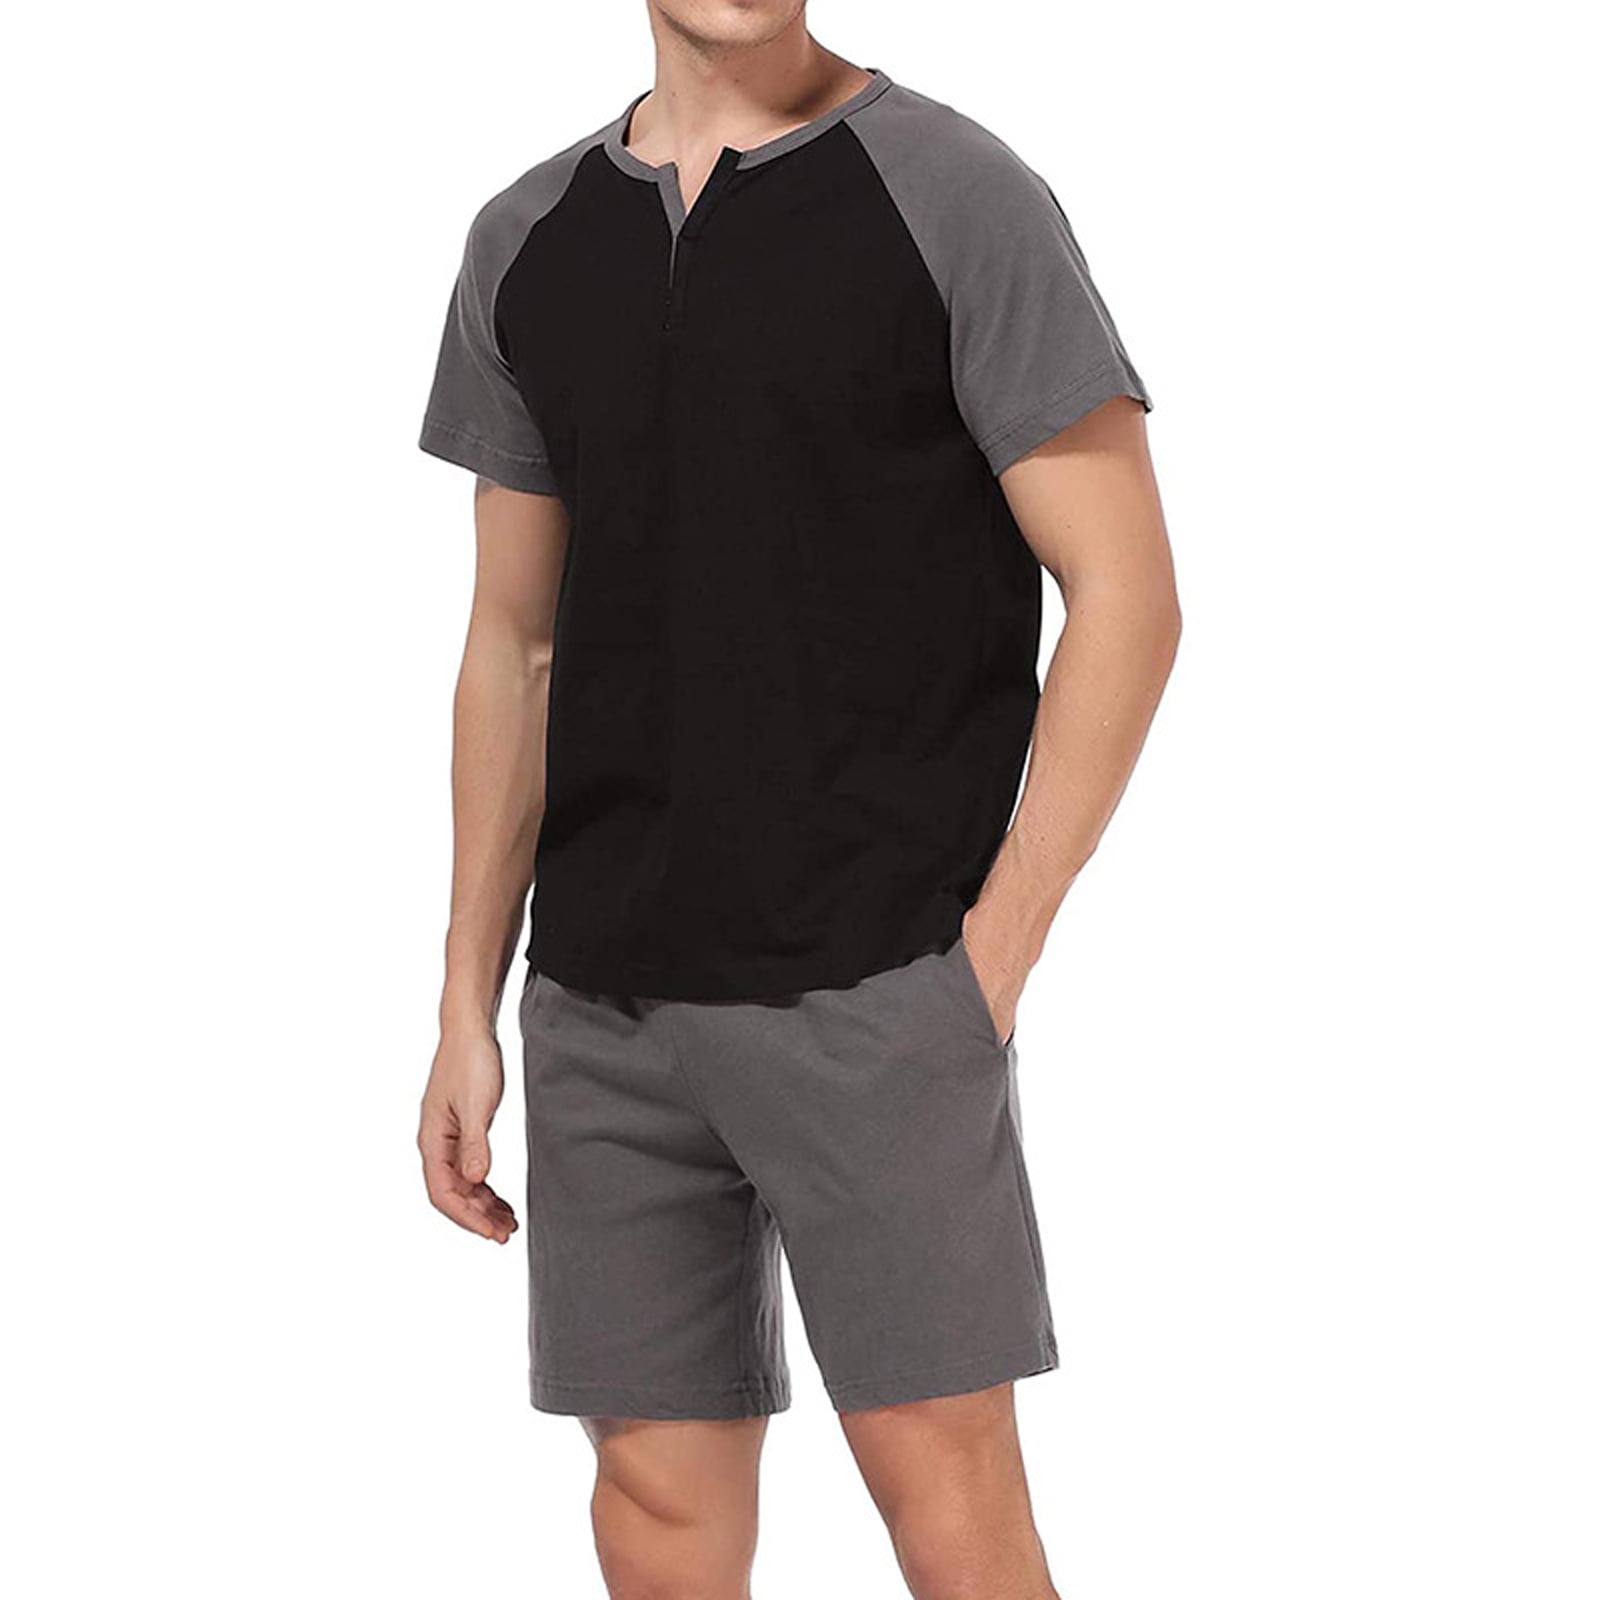 amropi Men's Lounge Shorts Nightwear Loose Fit Pyjama Bottoms Summer Sports Shorts